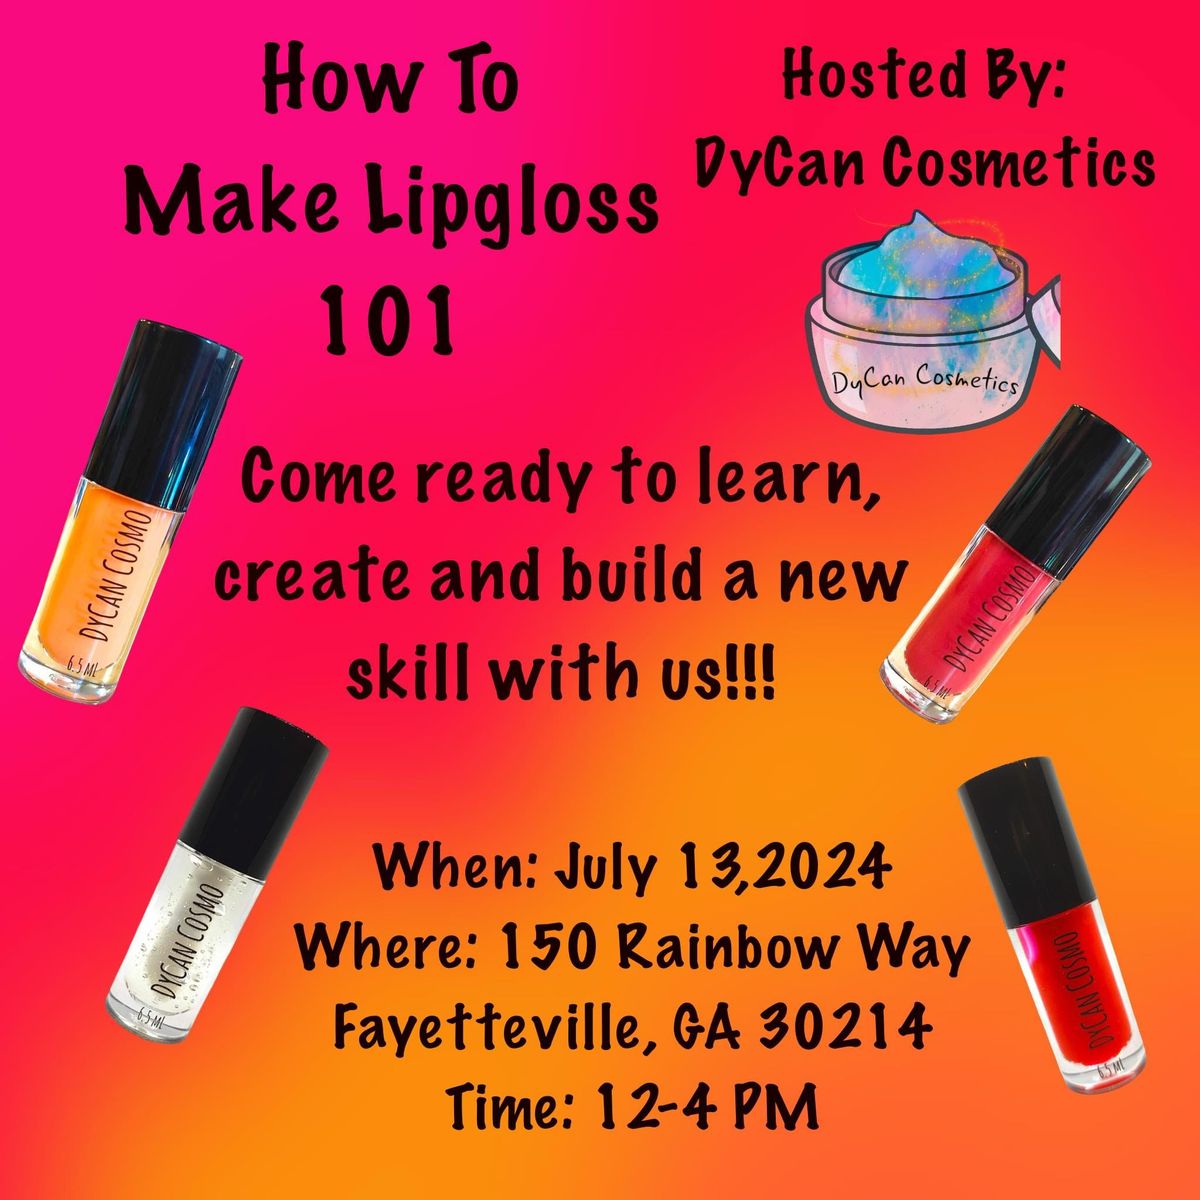 How To Make Lipgloss 101